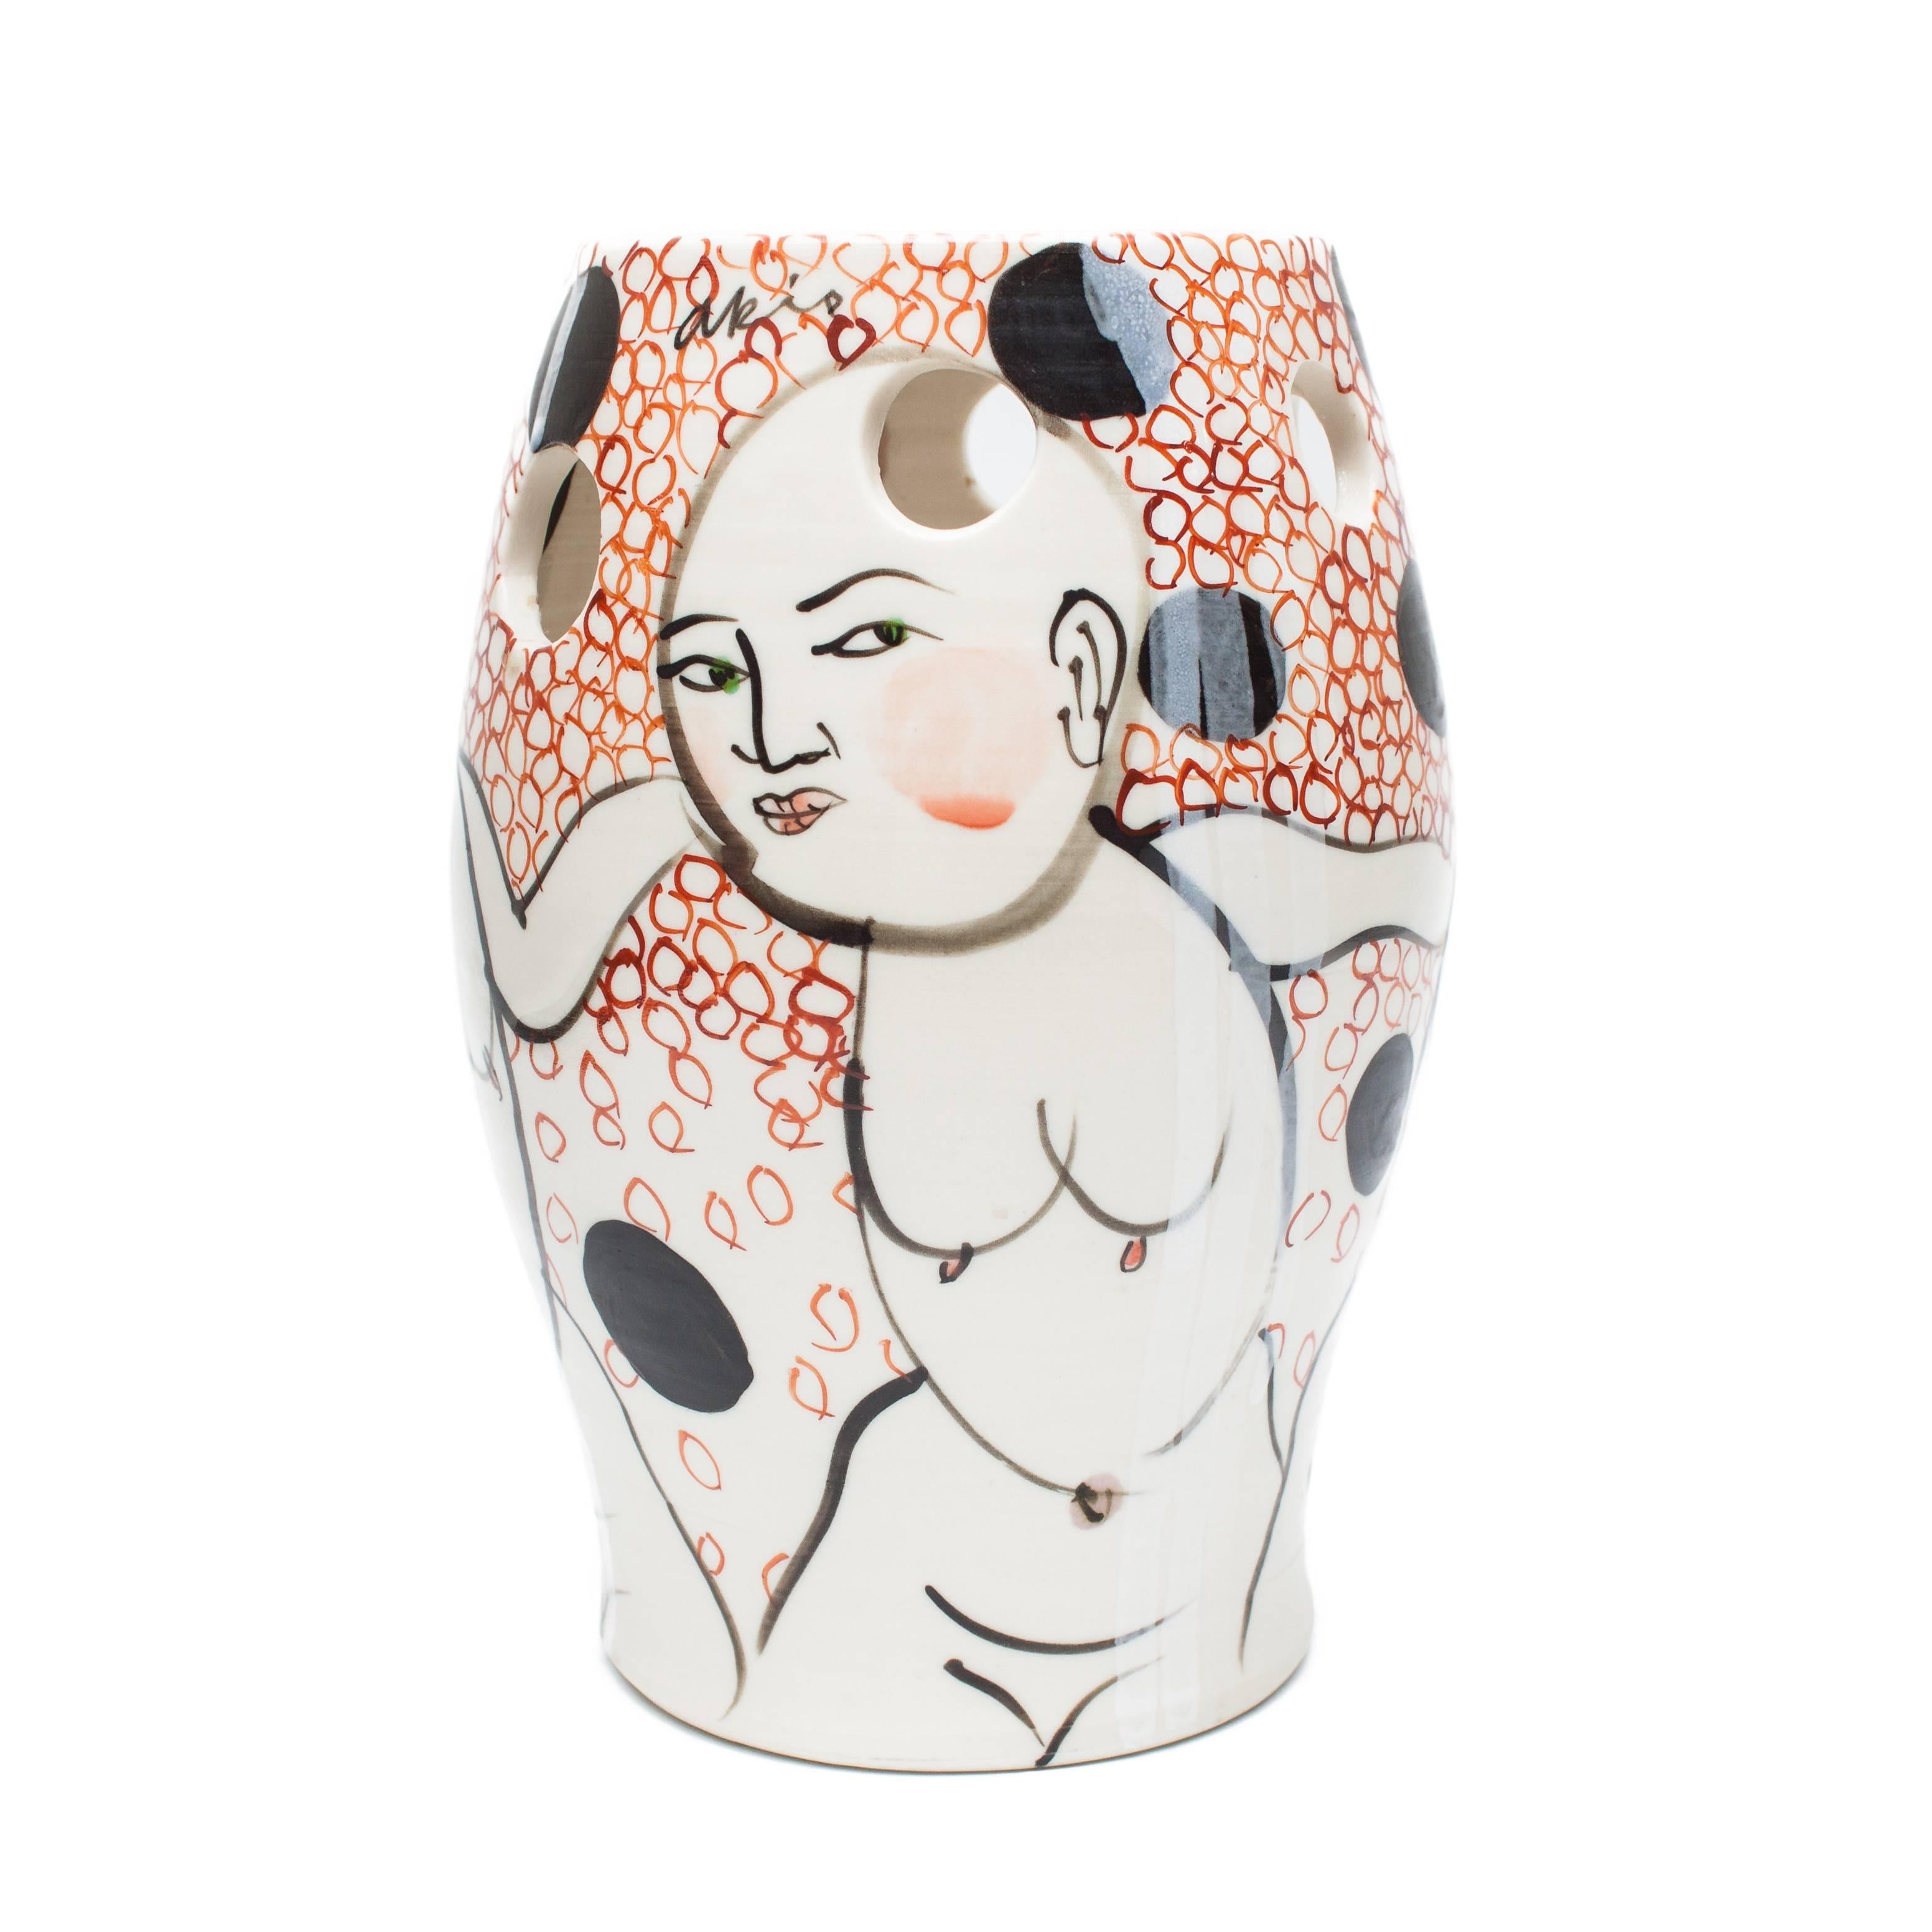 Vase with Women - Contemporary Art by Akio Takamori